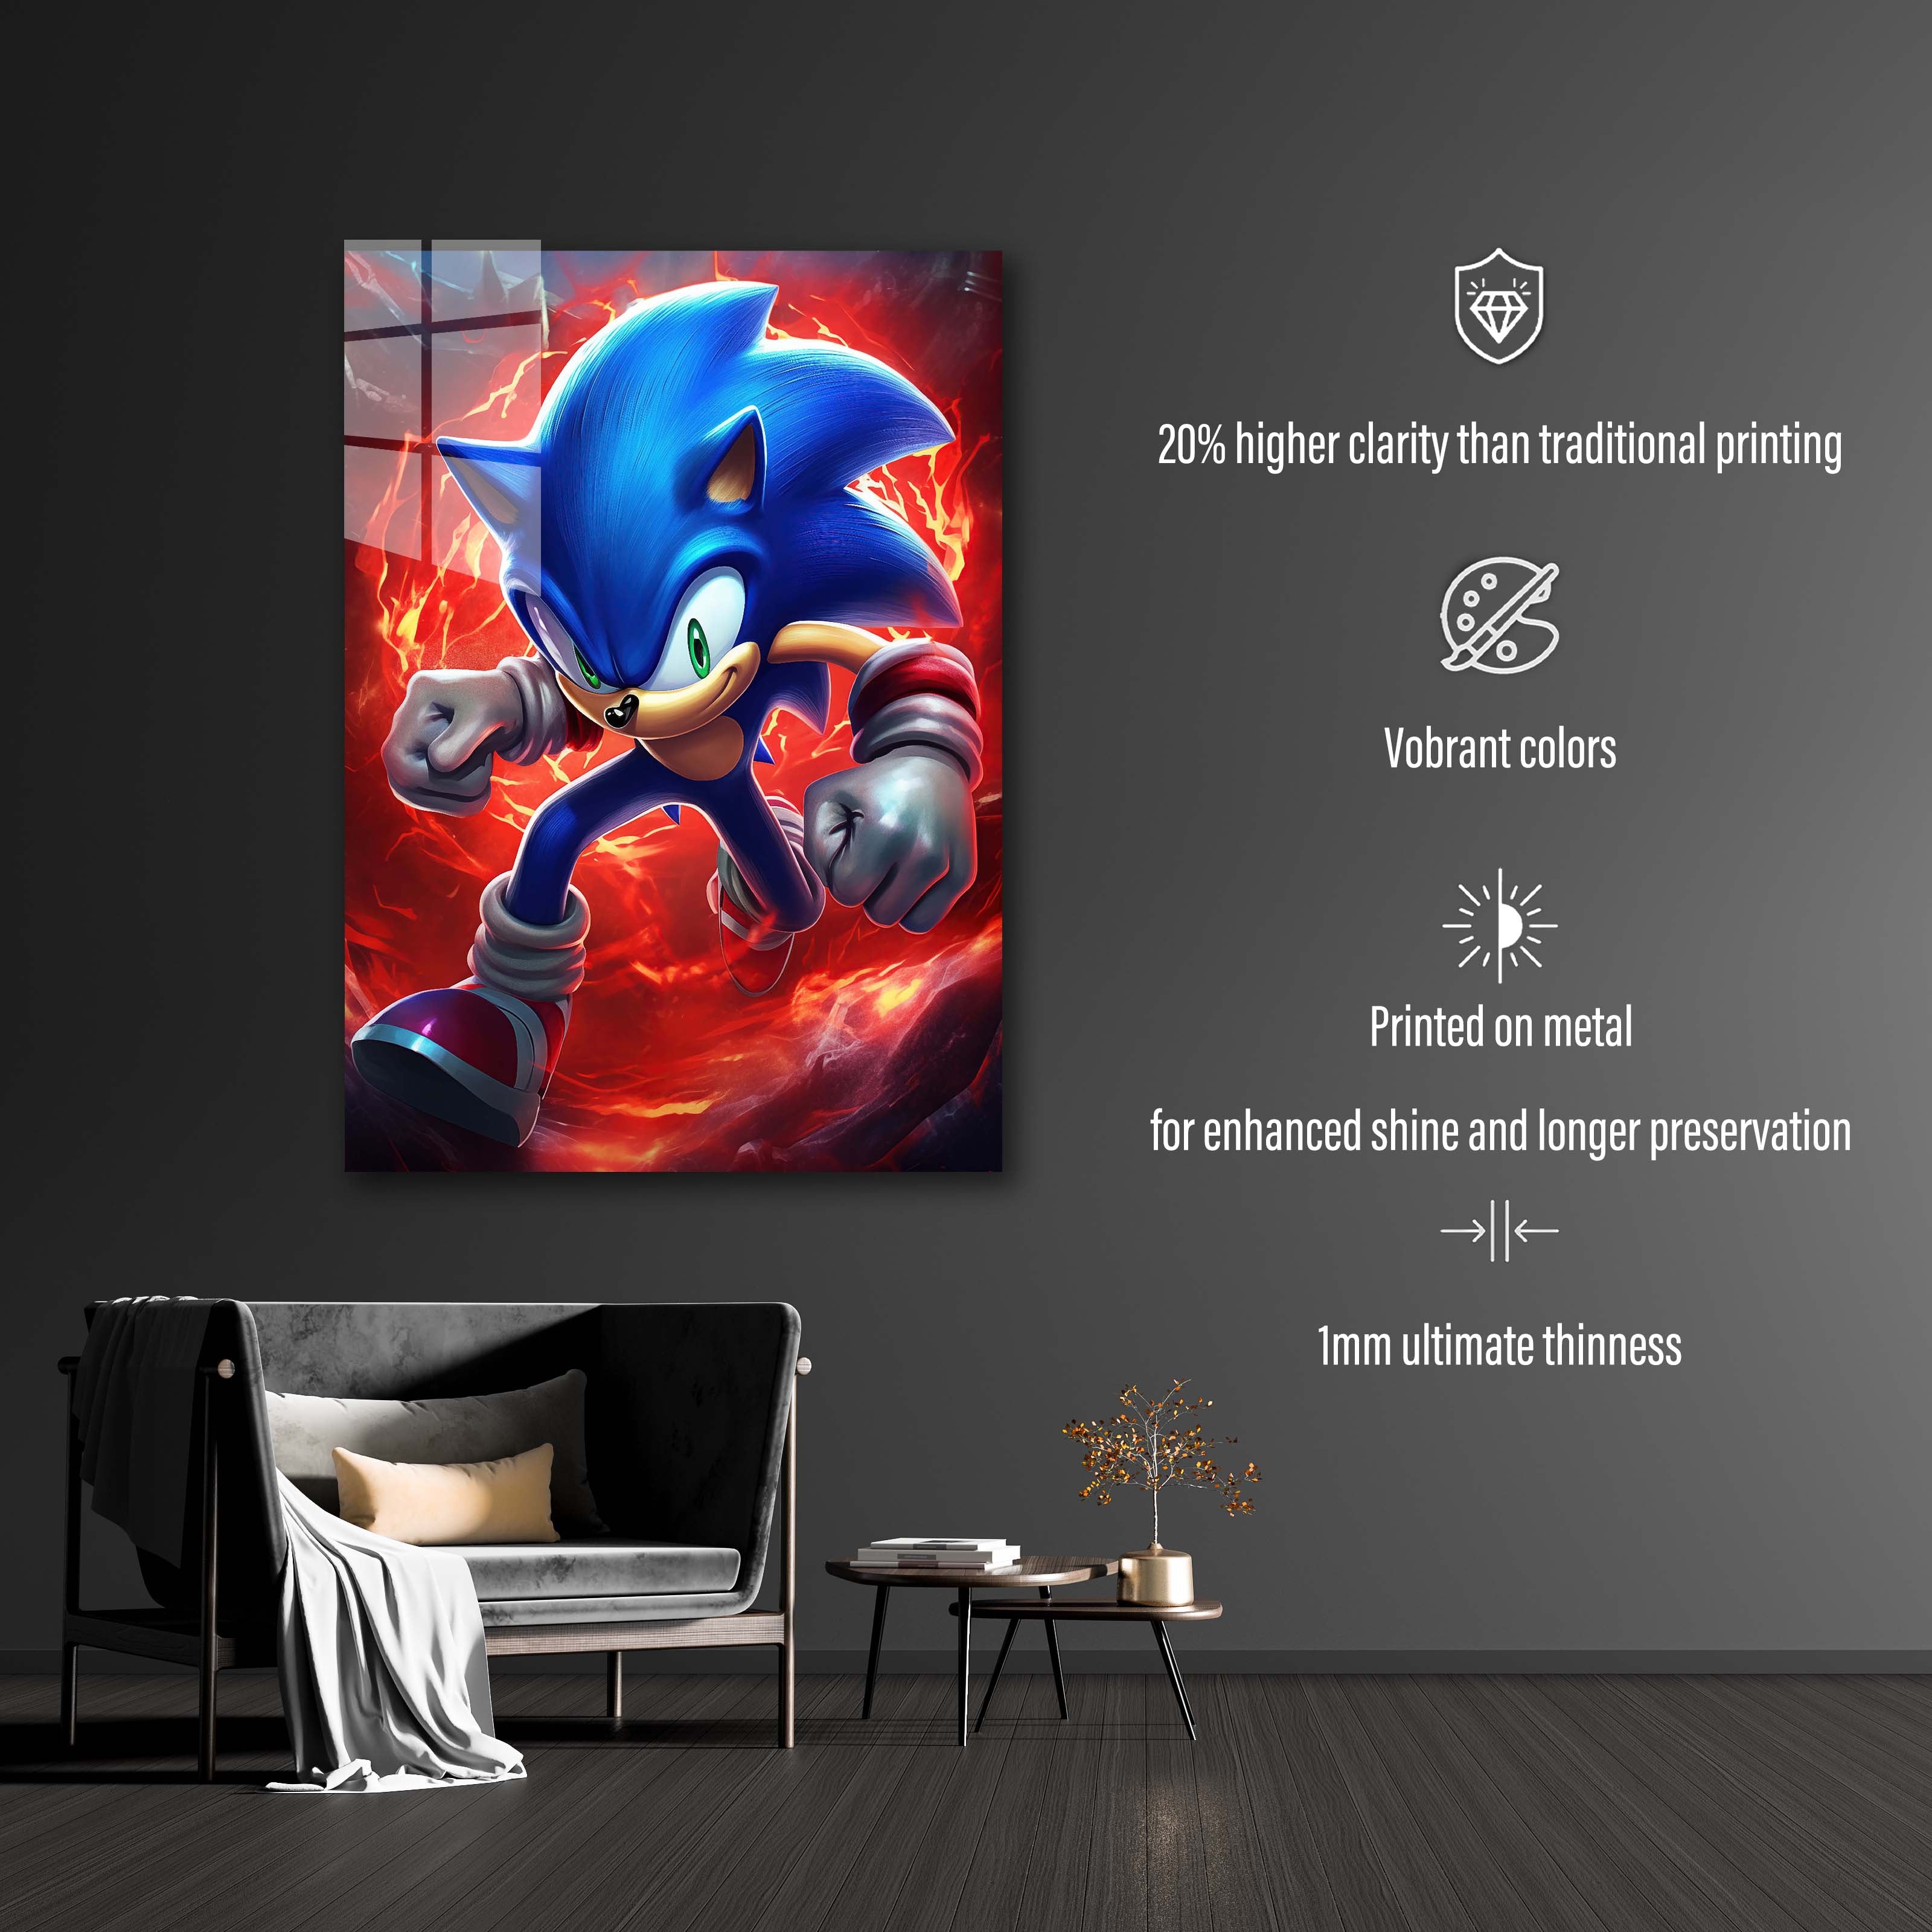 Sonic Power-designed by @Fluency Room